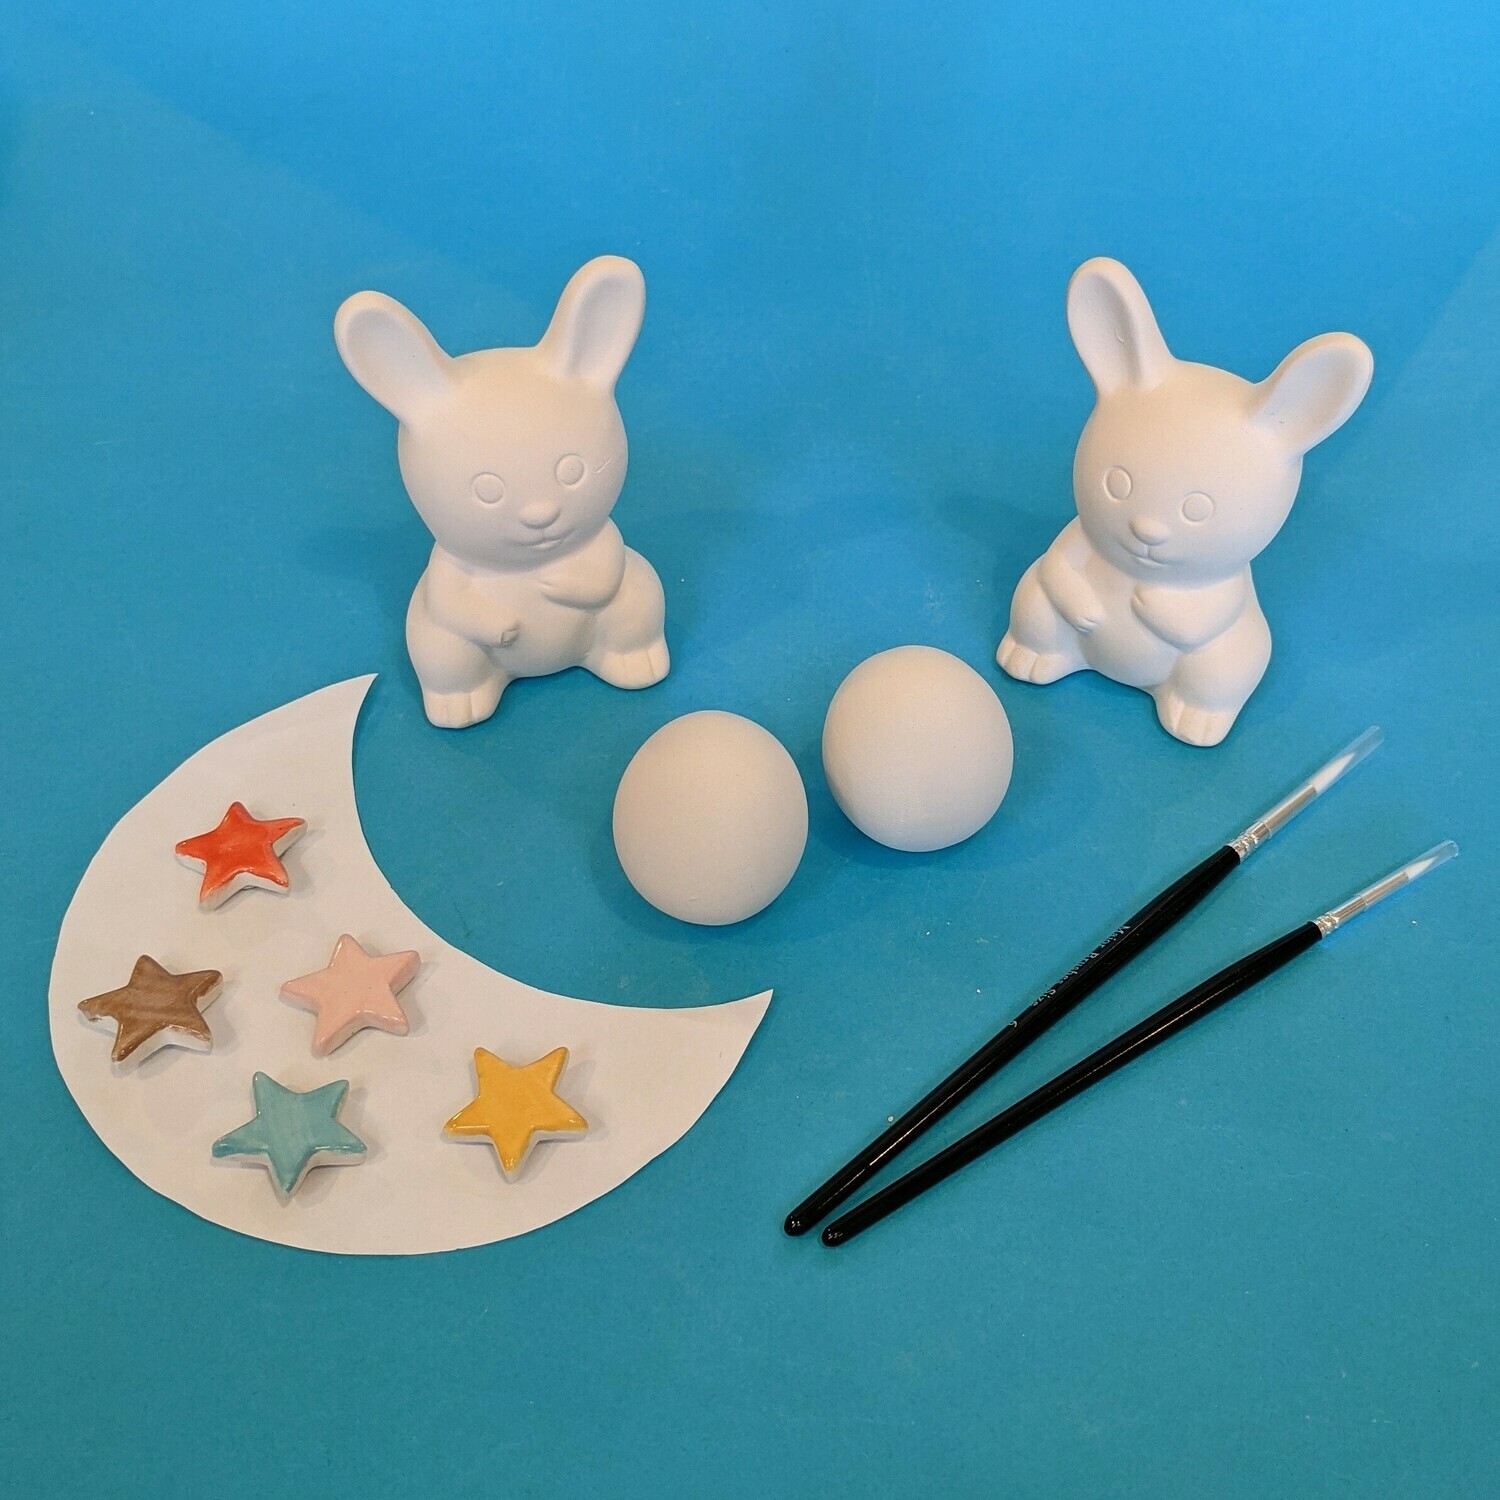 2 Nibbles rabbits, 2 mini eggs, glazes and brushes